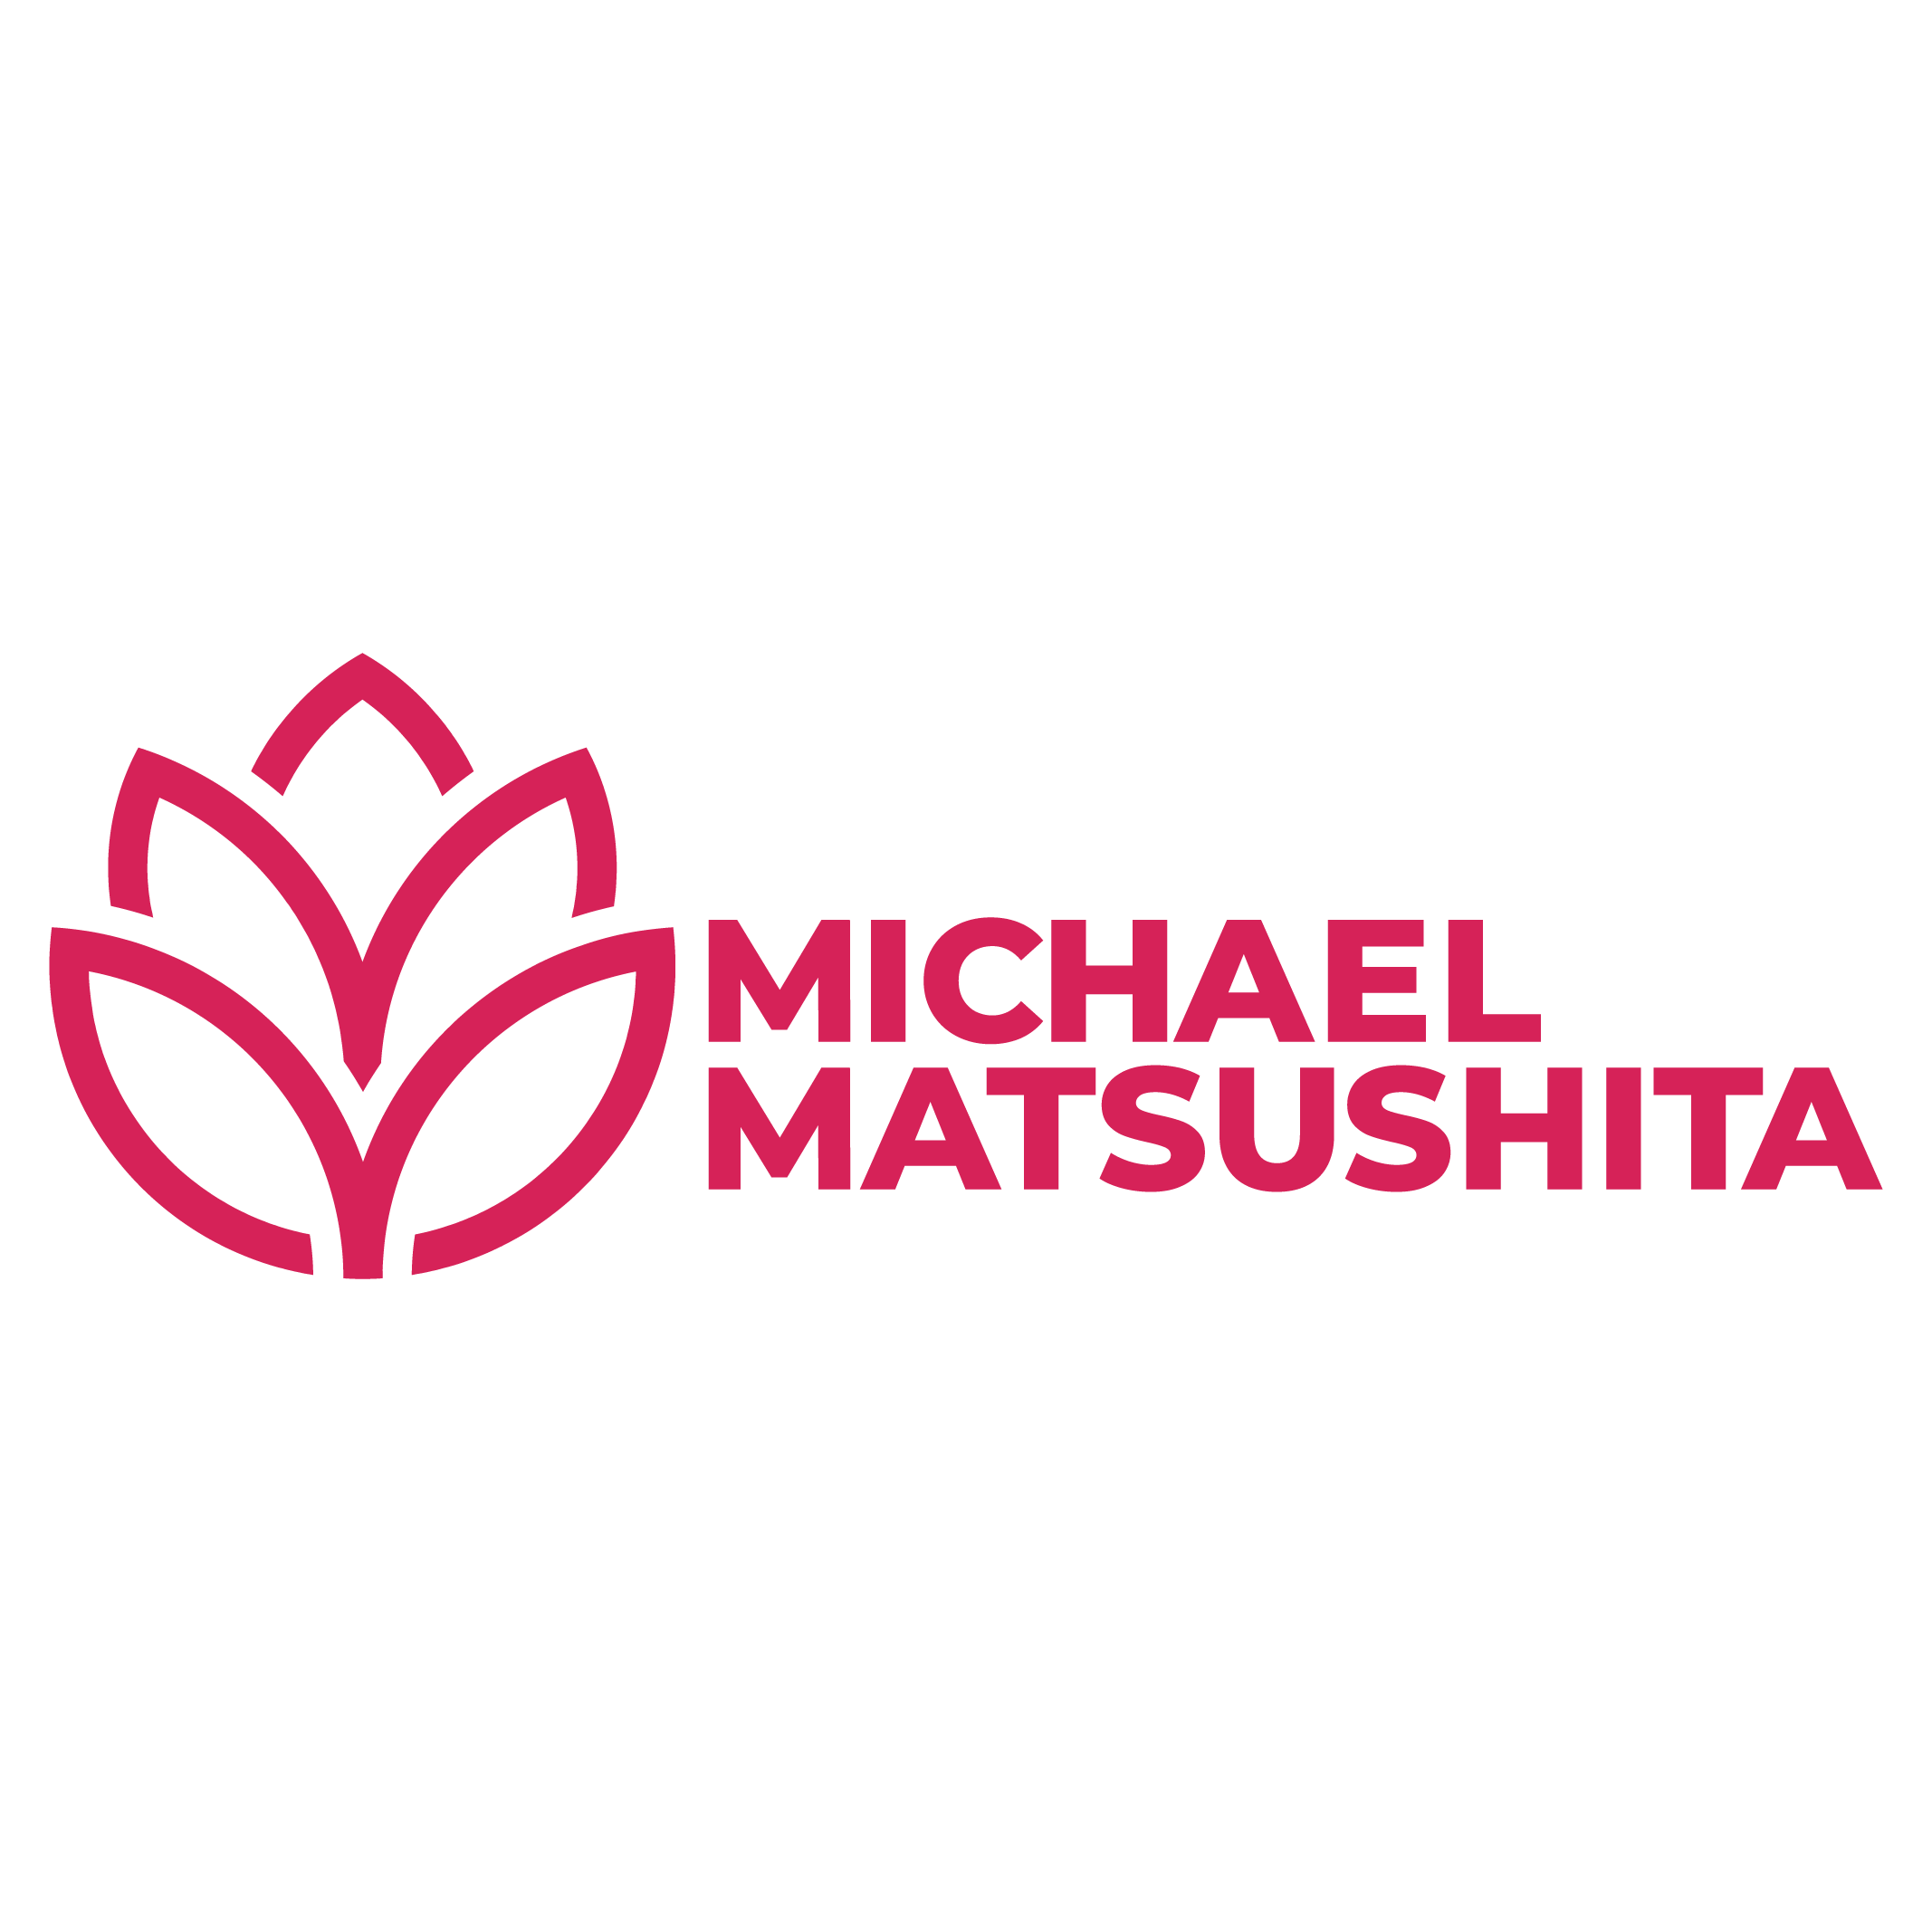 Michael Matsushita